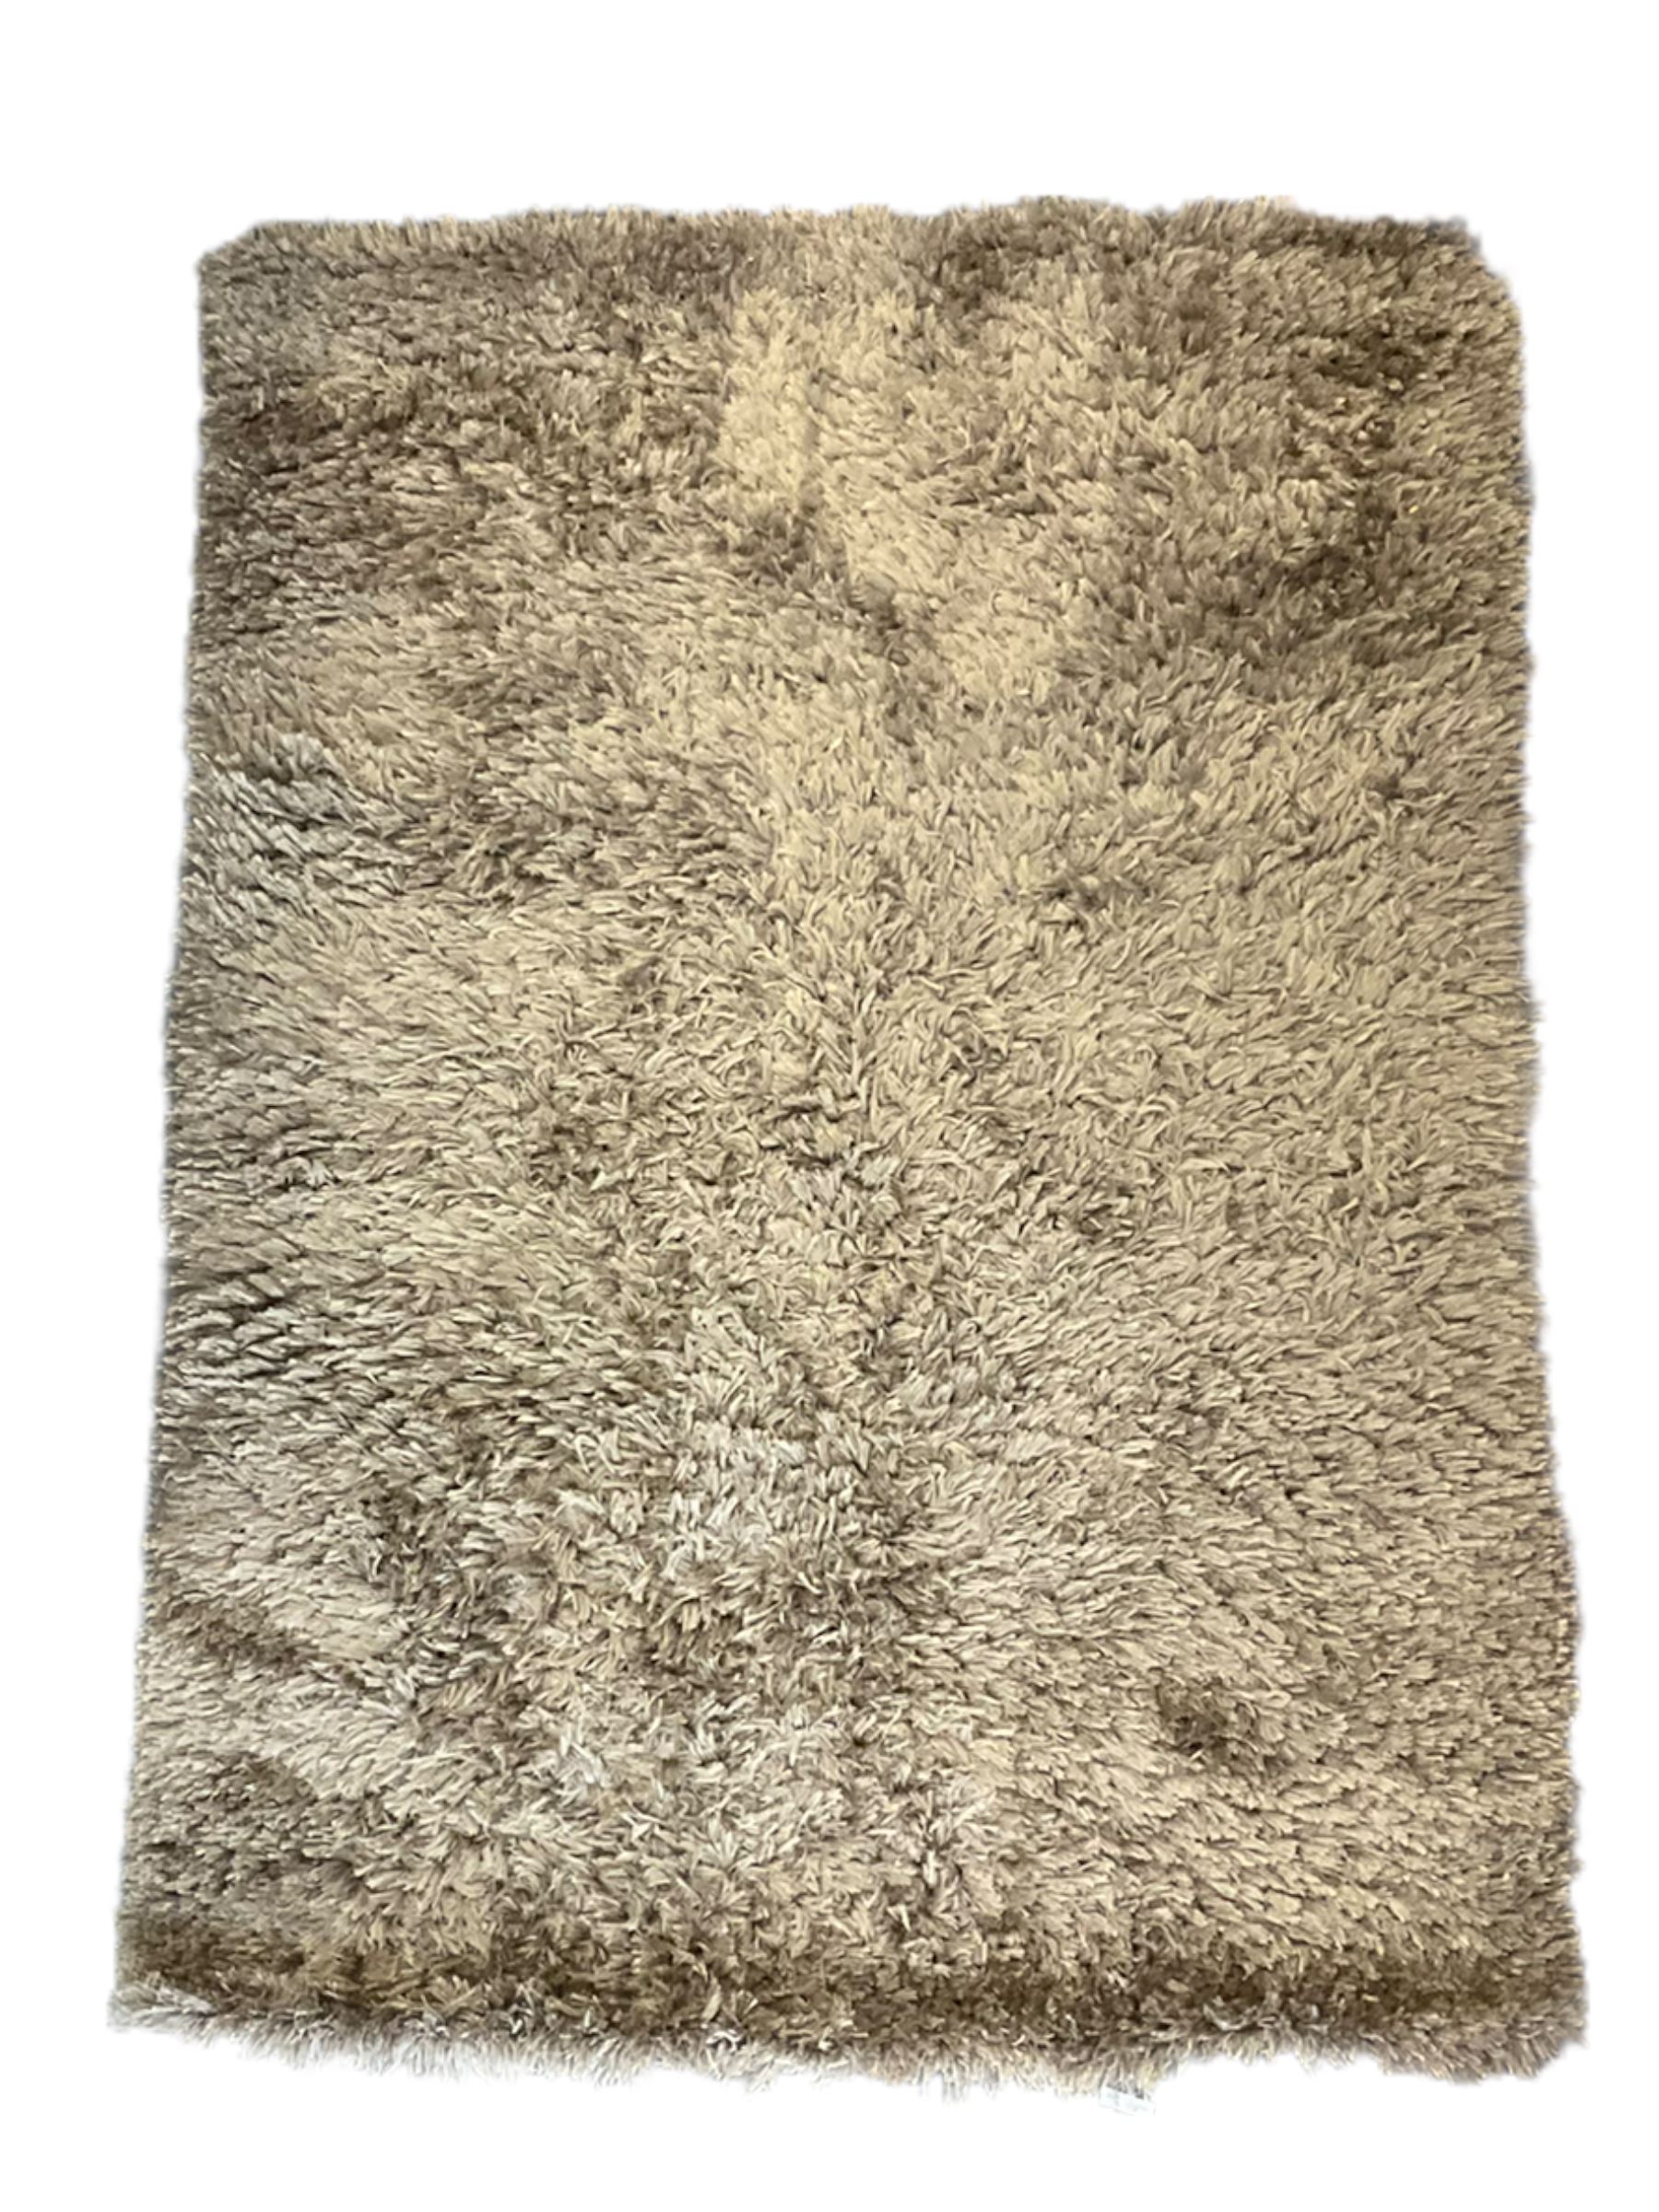 Rectangular modern rug - Image 2 of 7